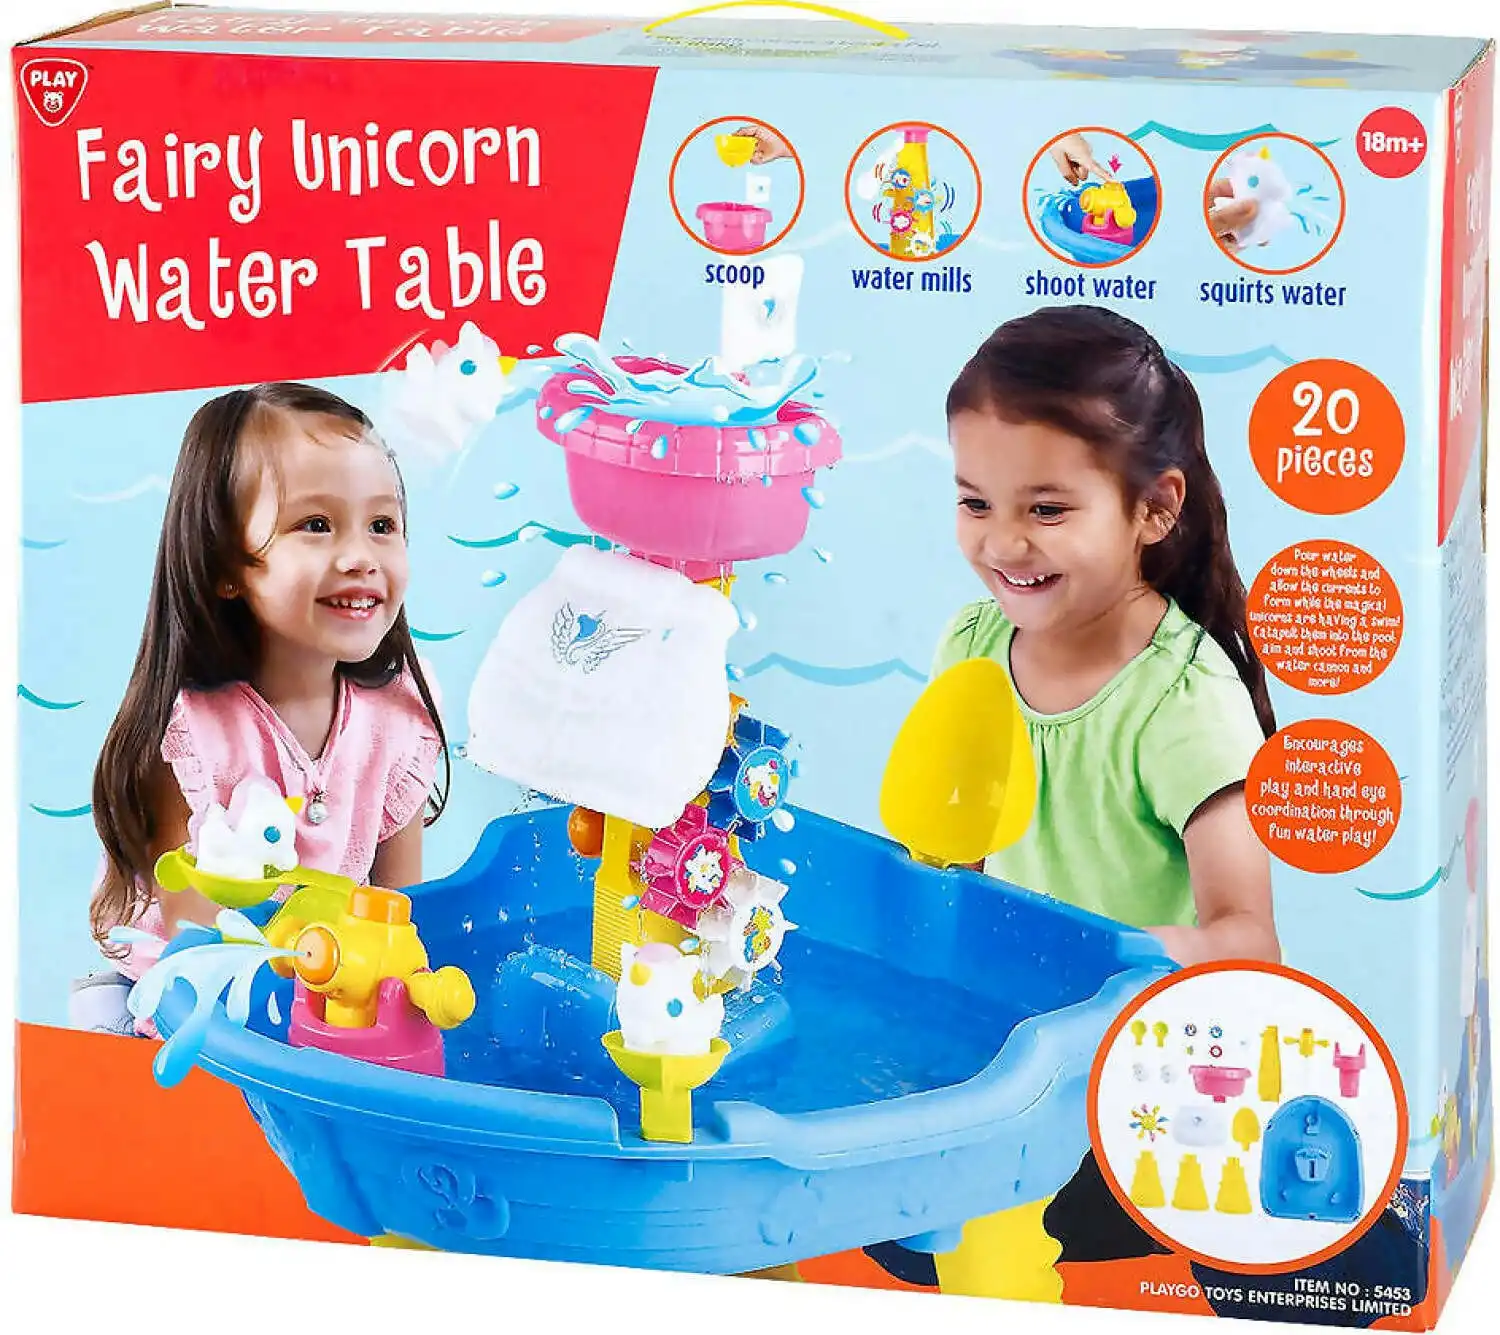 Playgo Toys Ent. Ltd - Fairy Unicorn Water Table